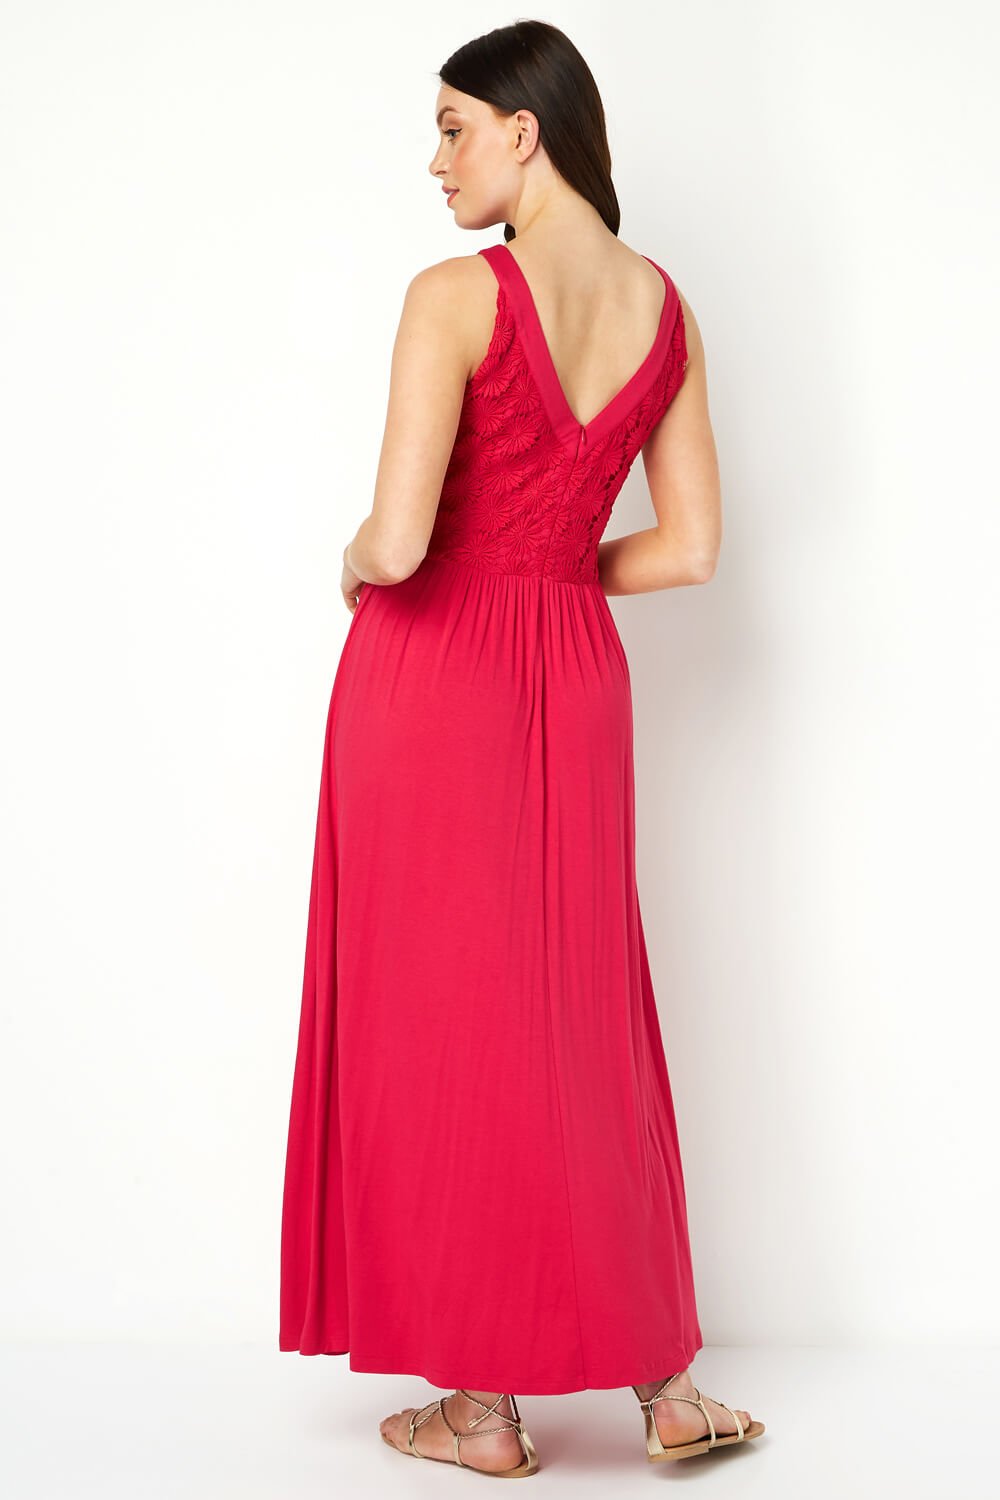 PINK Lace Bodice Jersey Maxi Dress, Image 2 of 4